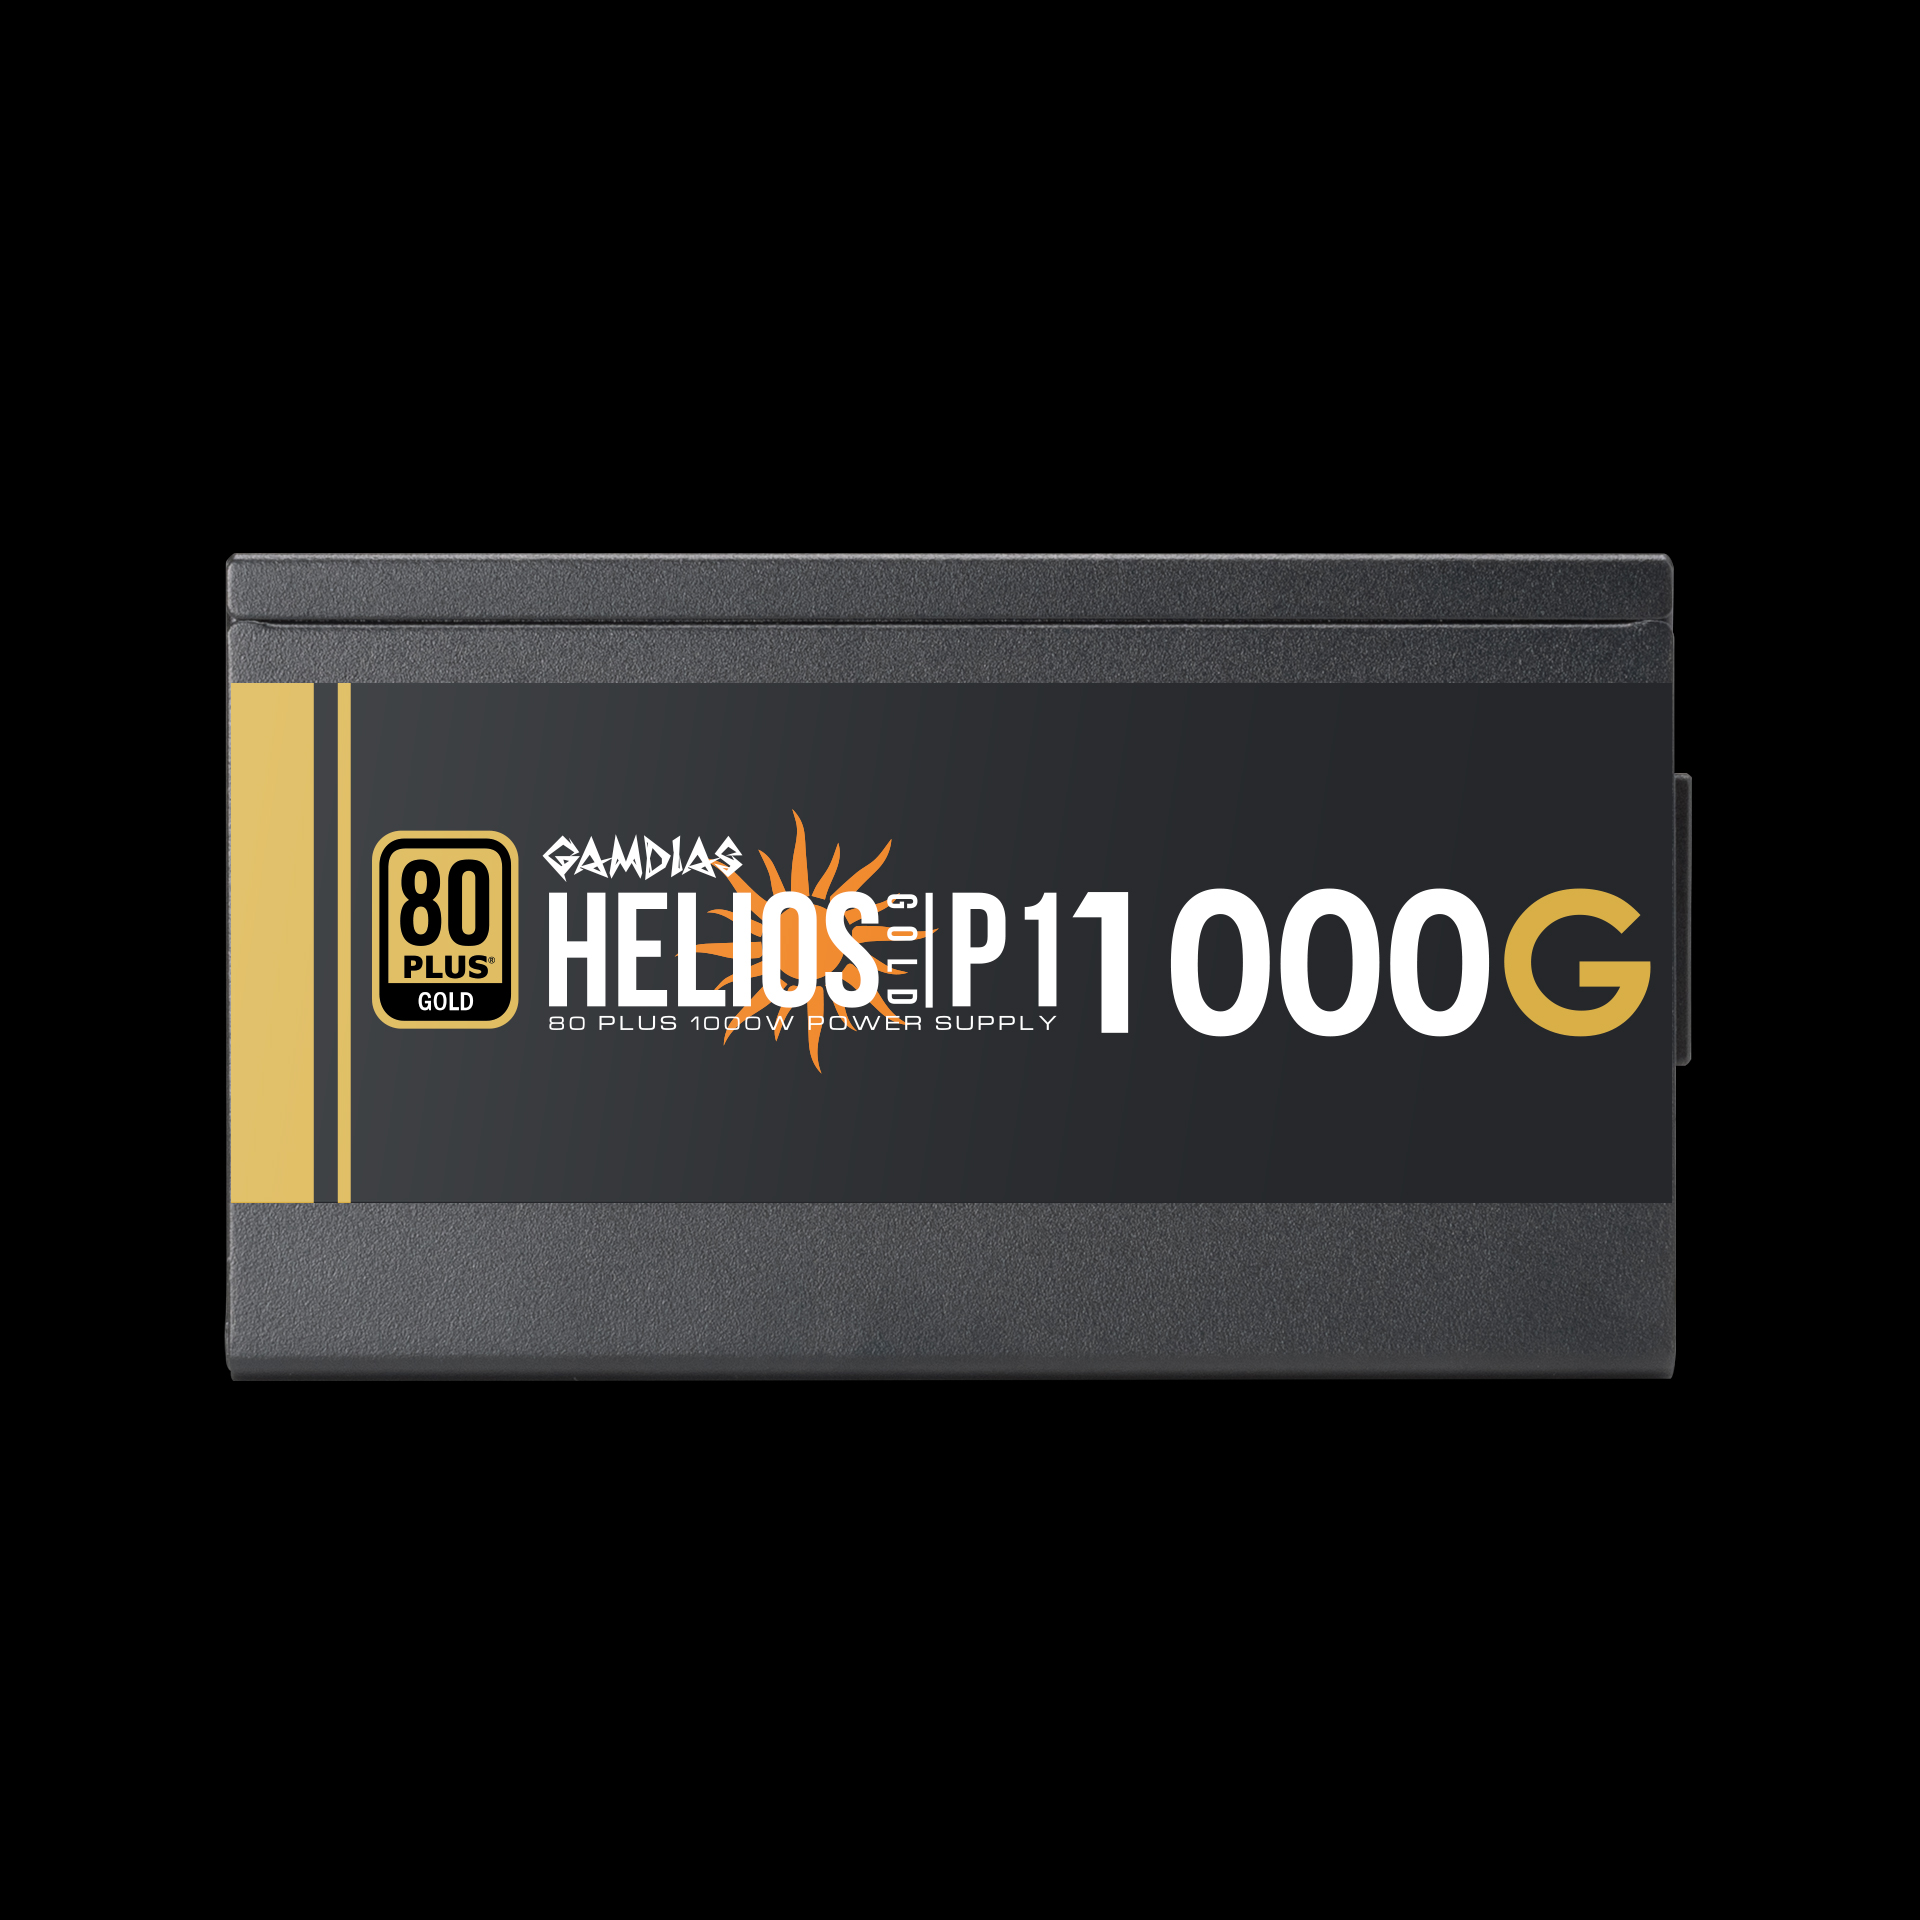 HELIOS P1-1000G 80 PLUS Gold Fully Modular Power Supply